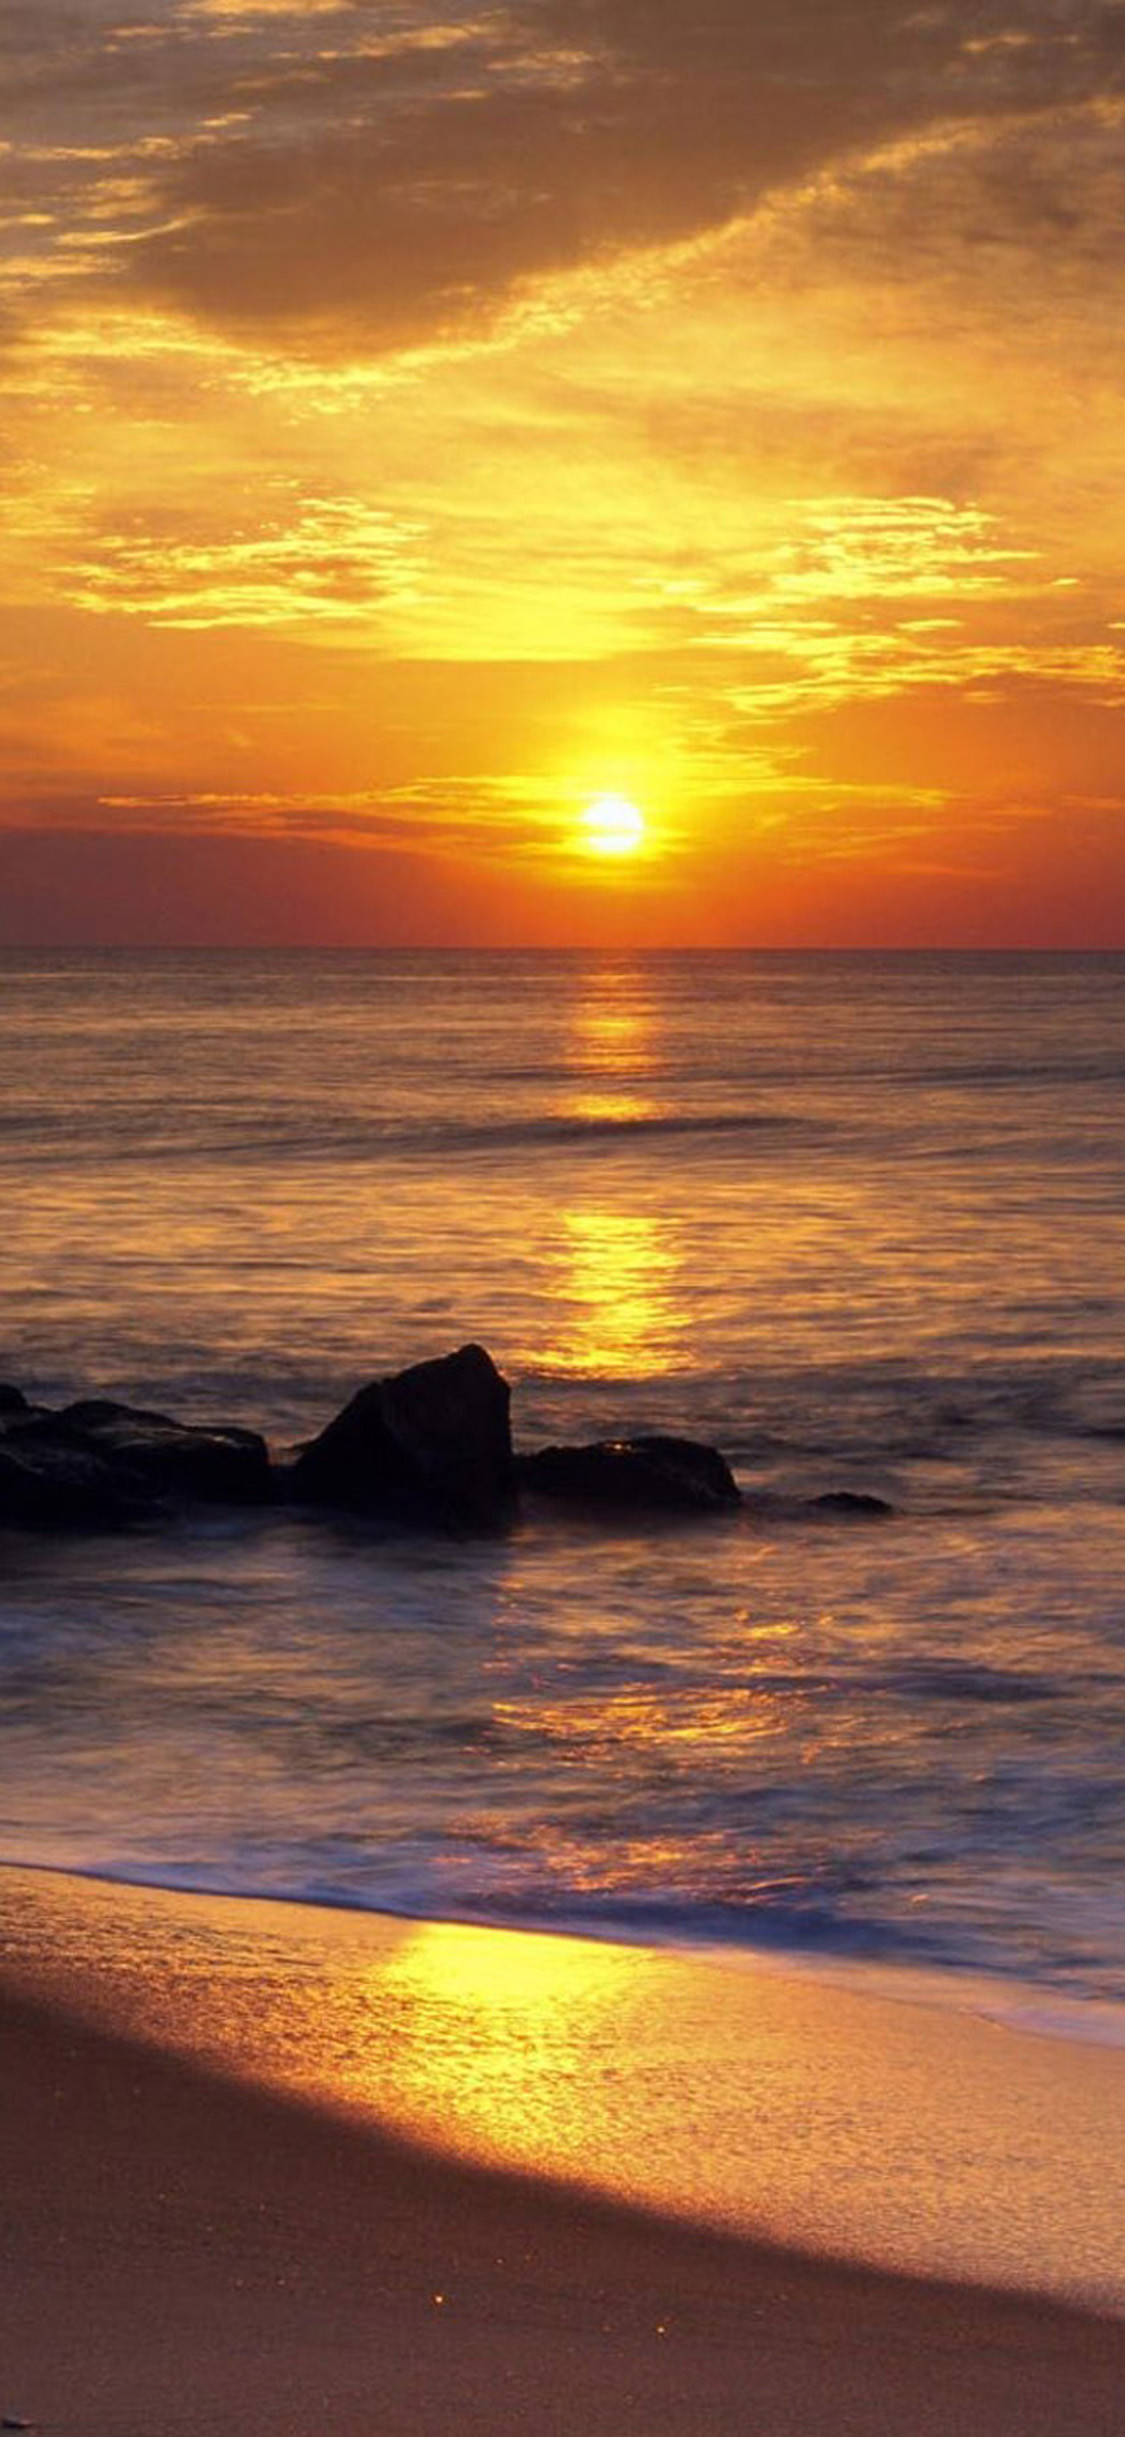 1125x2437 Sunrise Beach Coast iPhone X Wallpaper